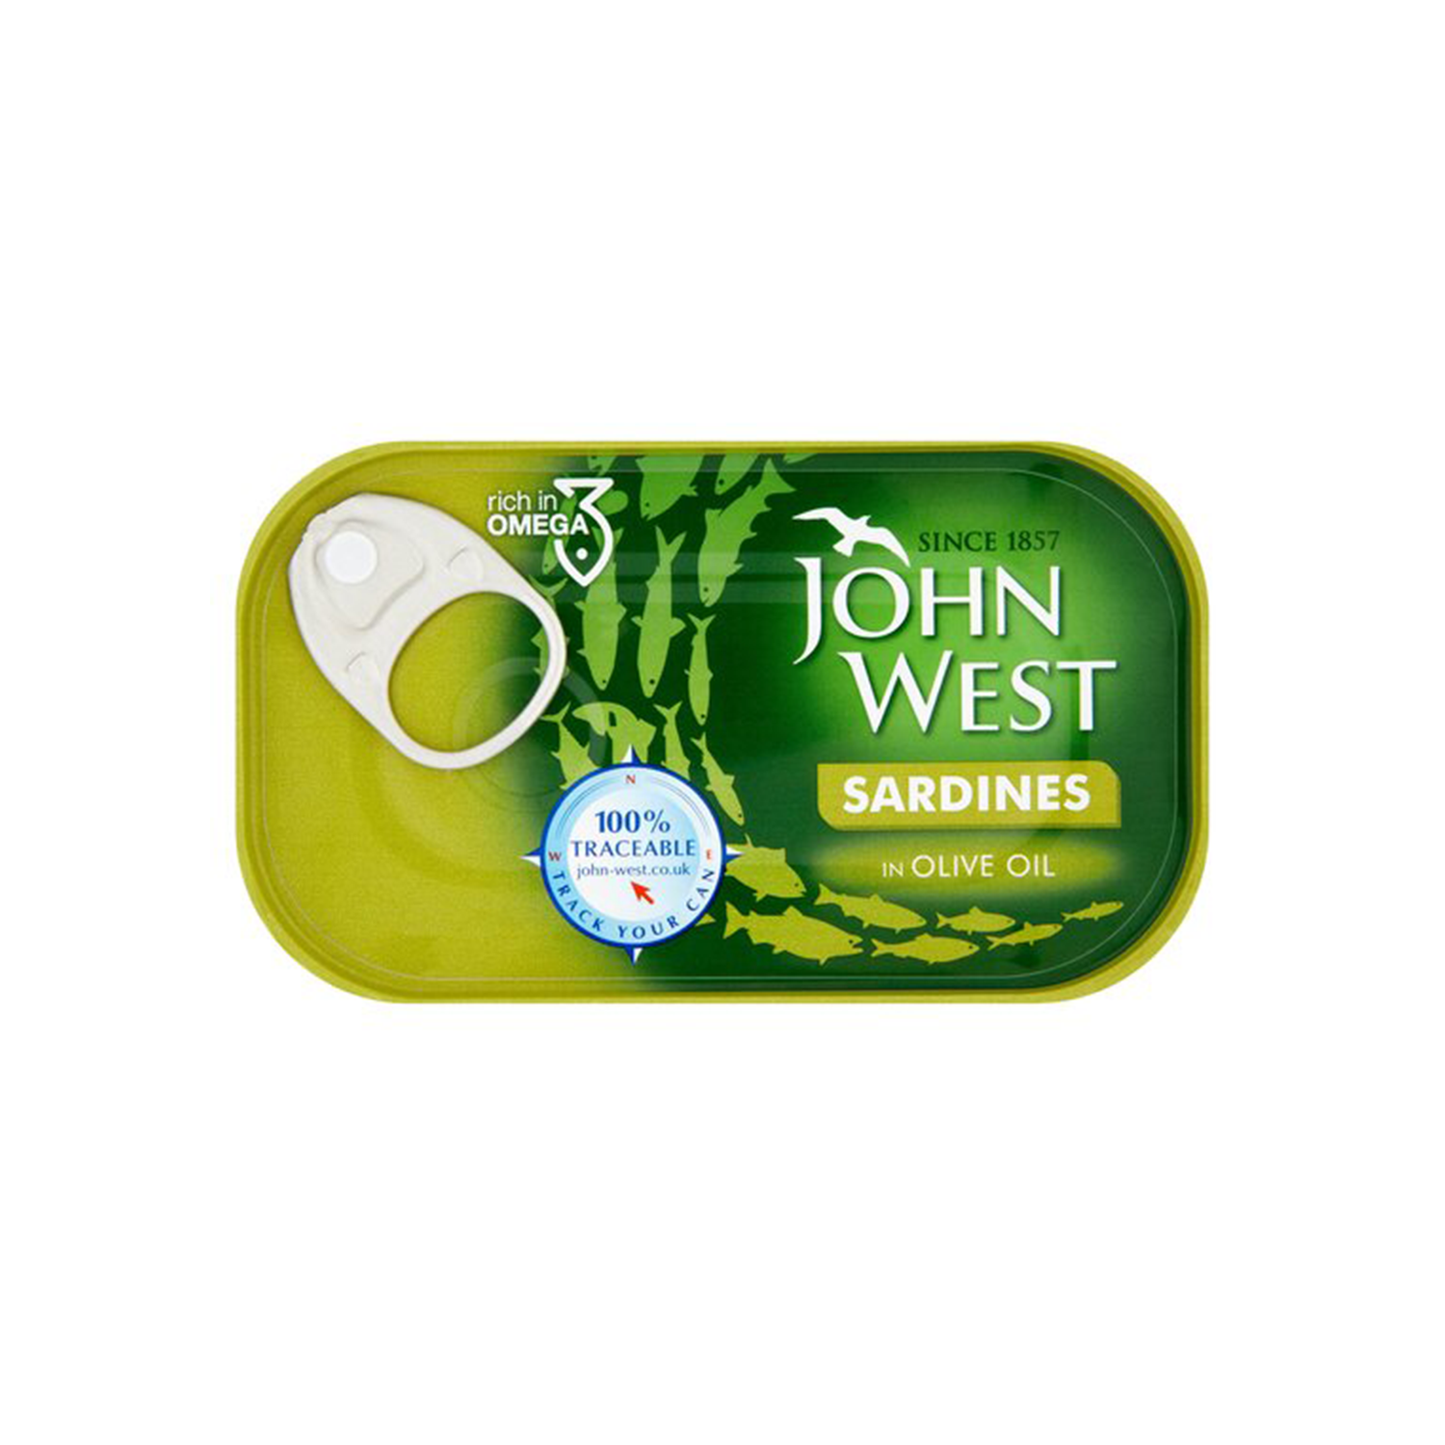 John West sardines in olive oil 120g